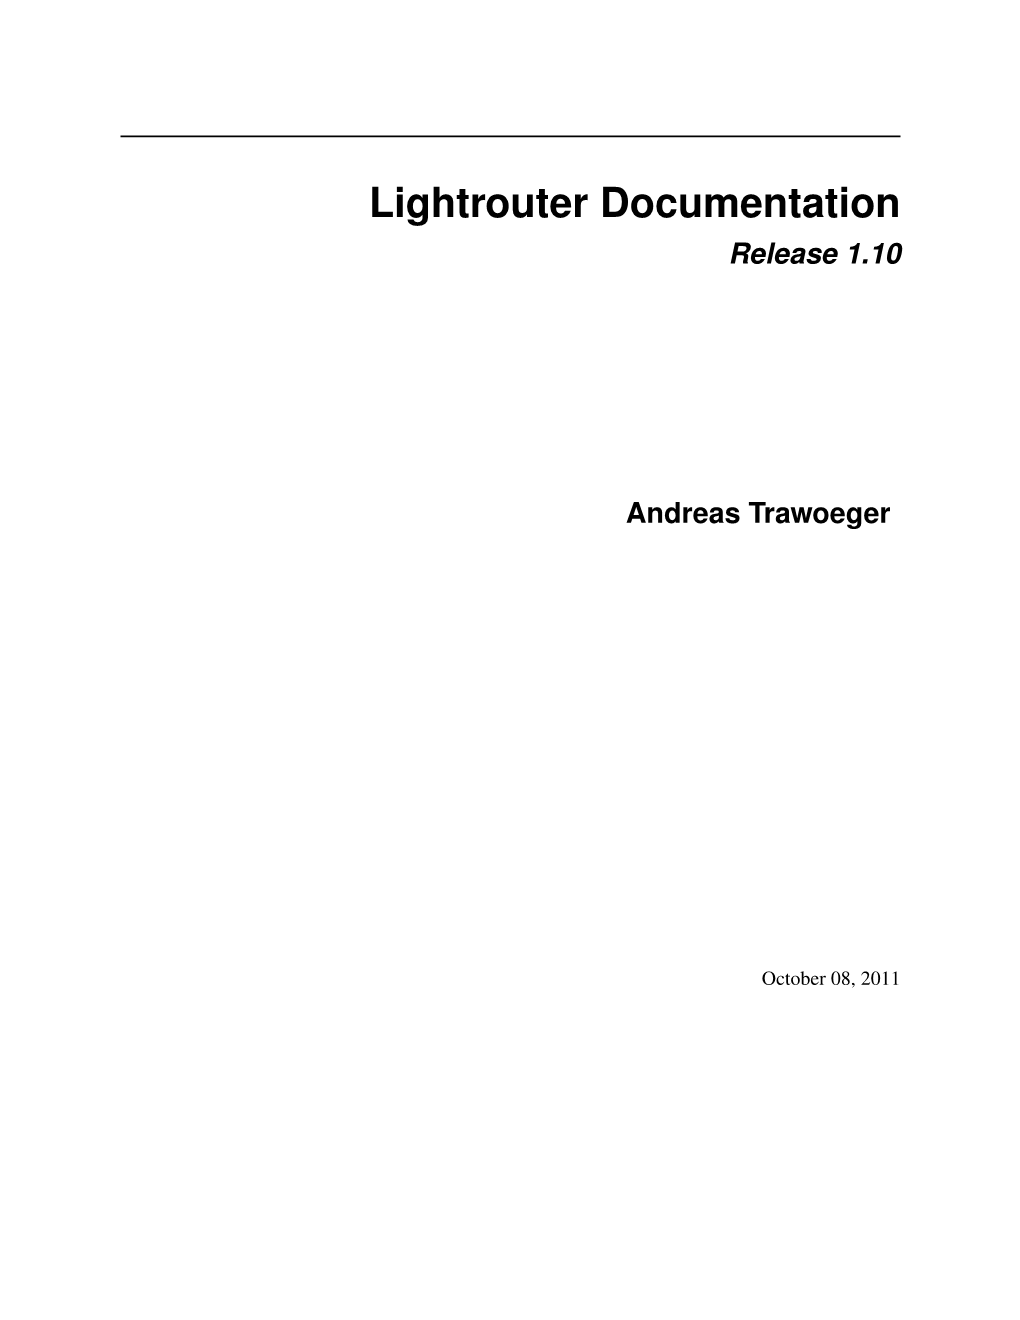 Lightrouter Documentation Release 1.10